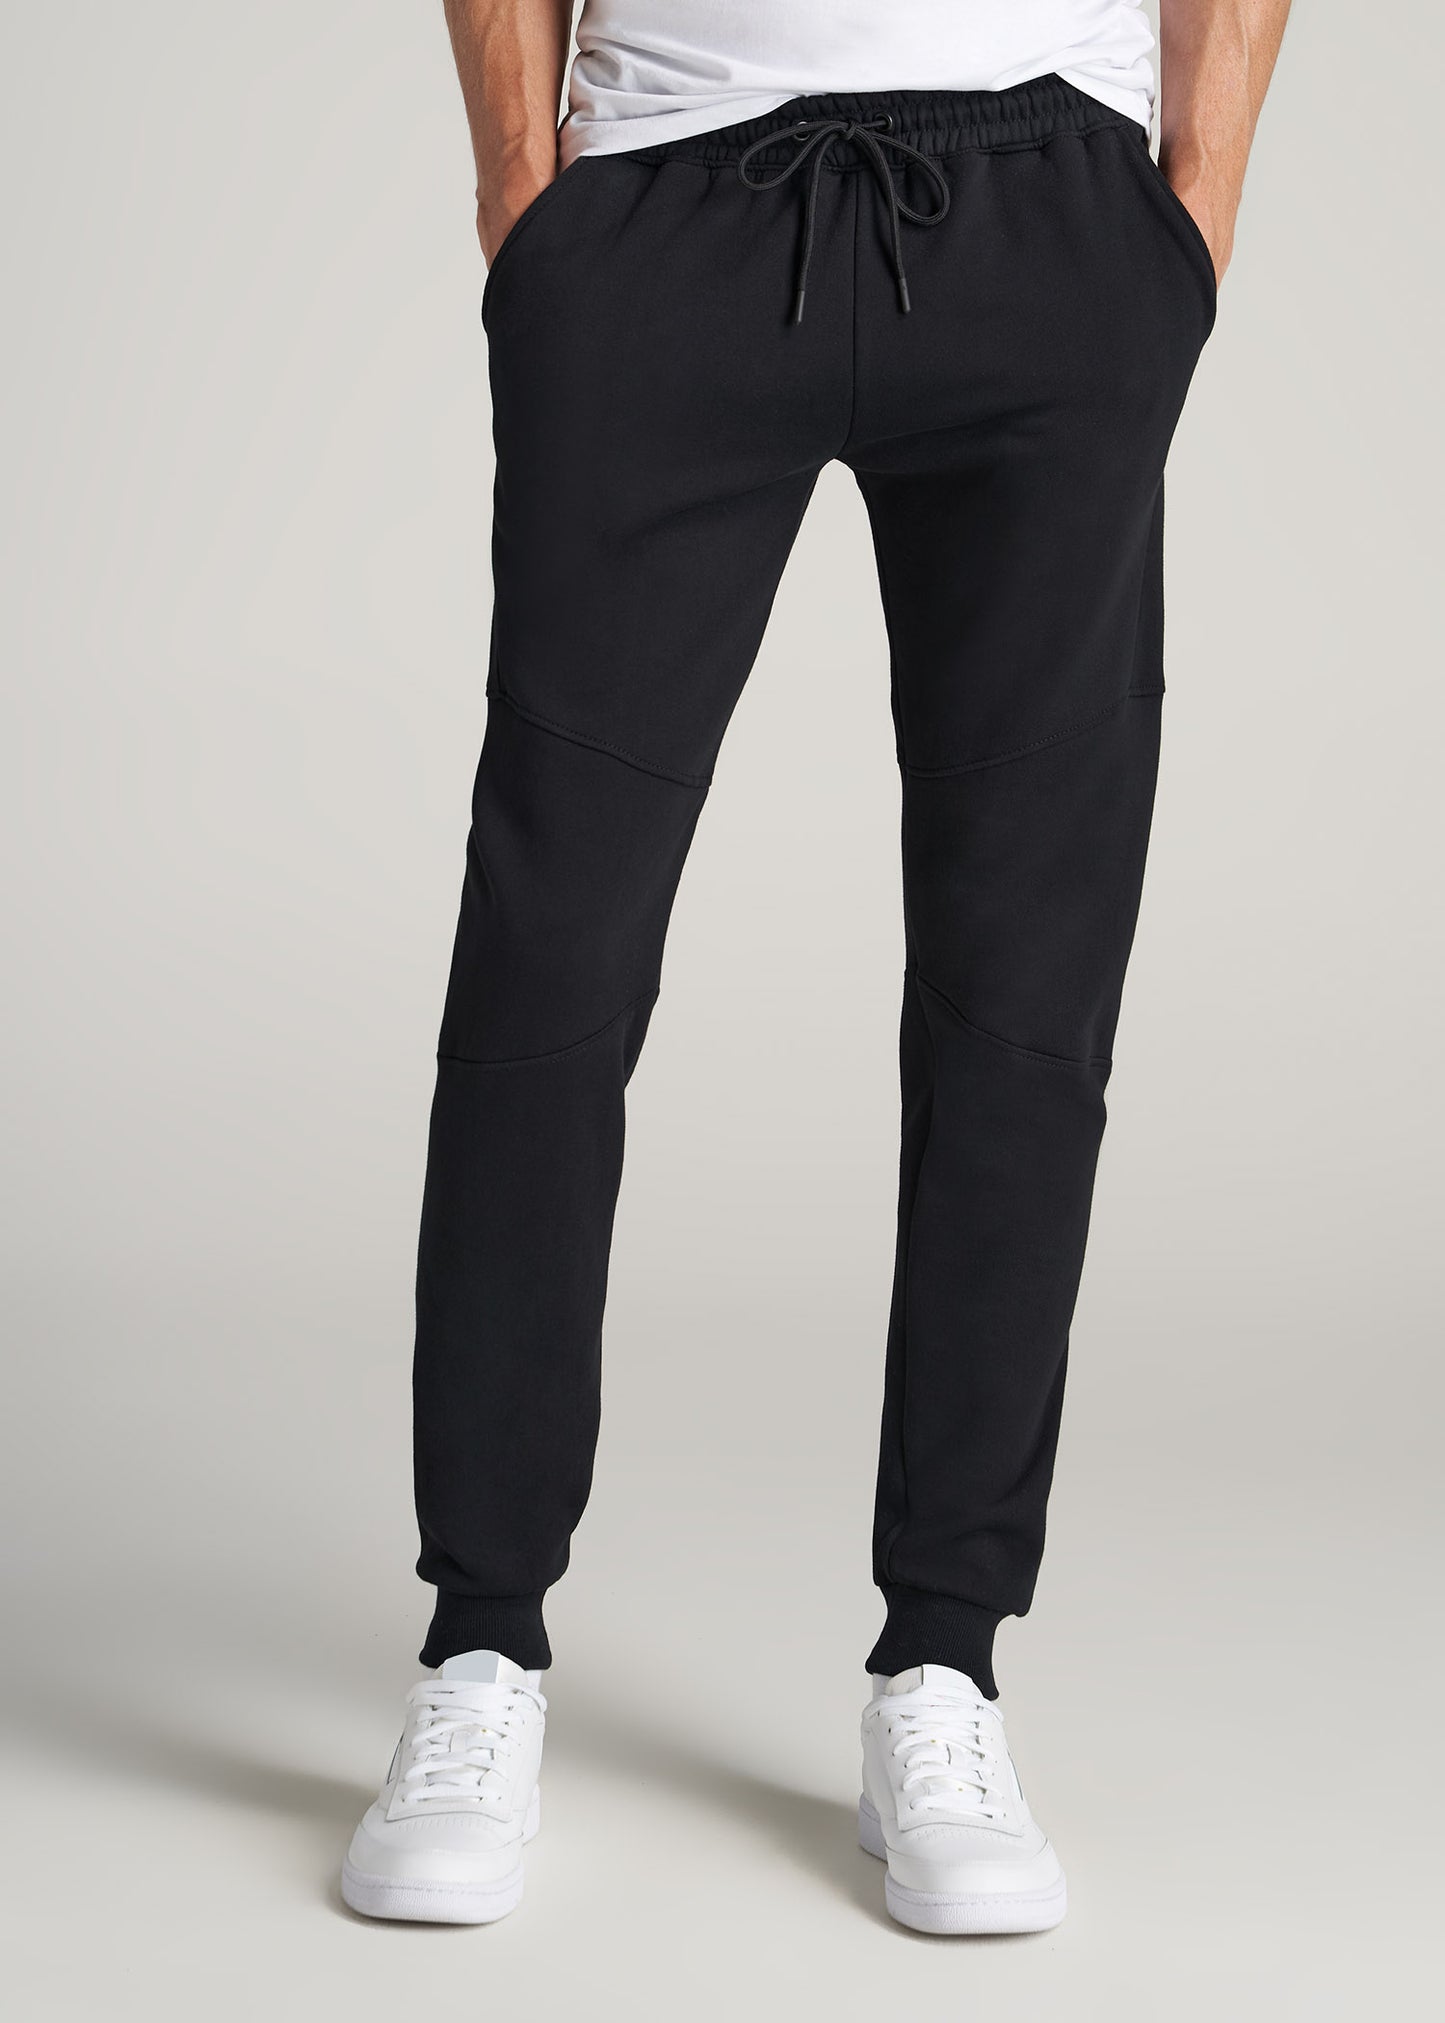 Black Sweatpants for Tall Guys: Men's Tall Fleece Black Jogger – American  Tall